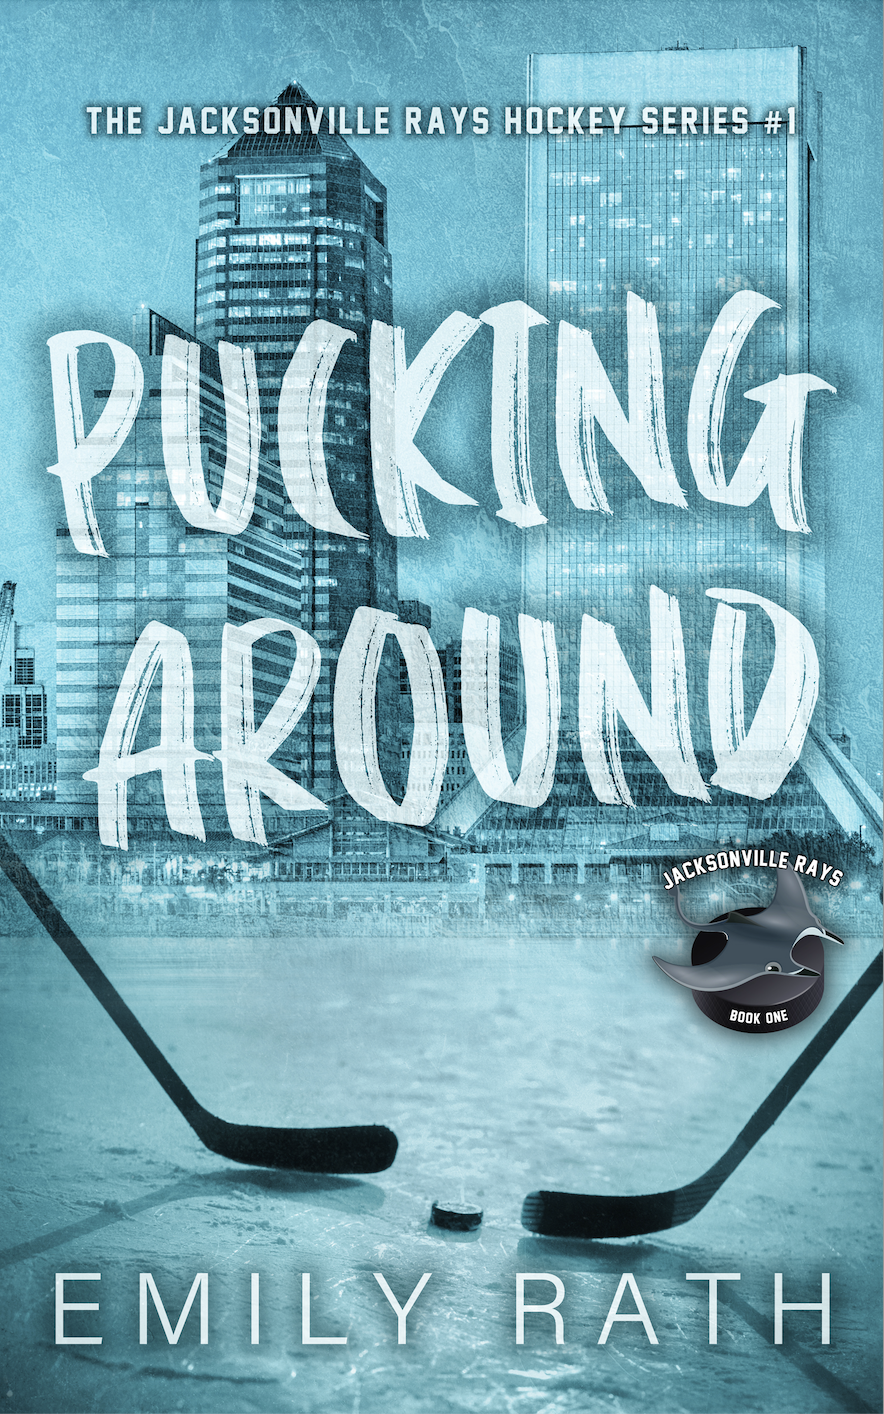 Cover of Pucking Around